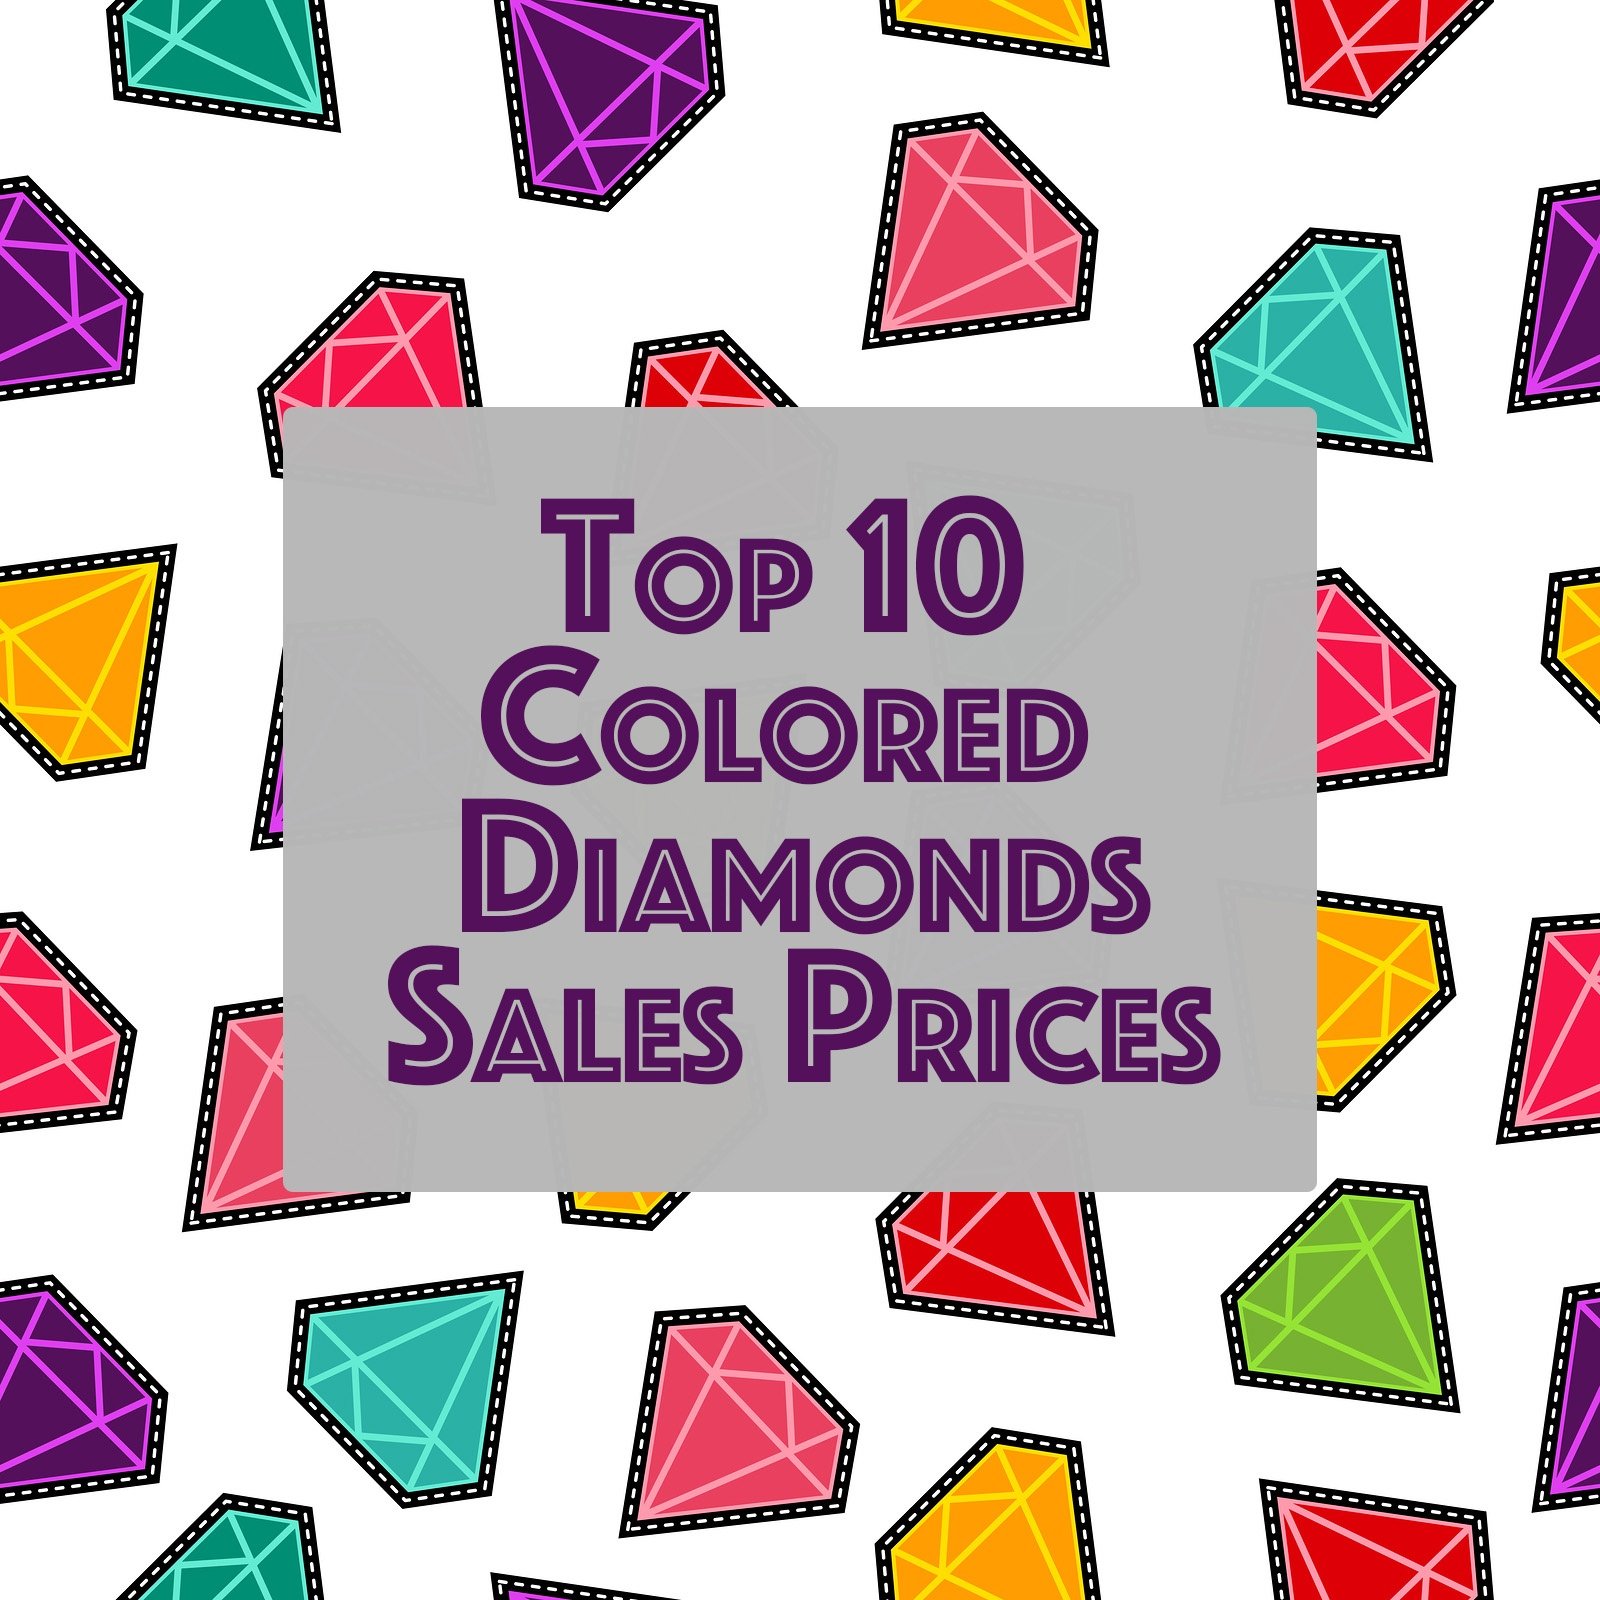 colored diamonds sales prices.jpg